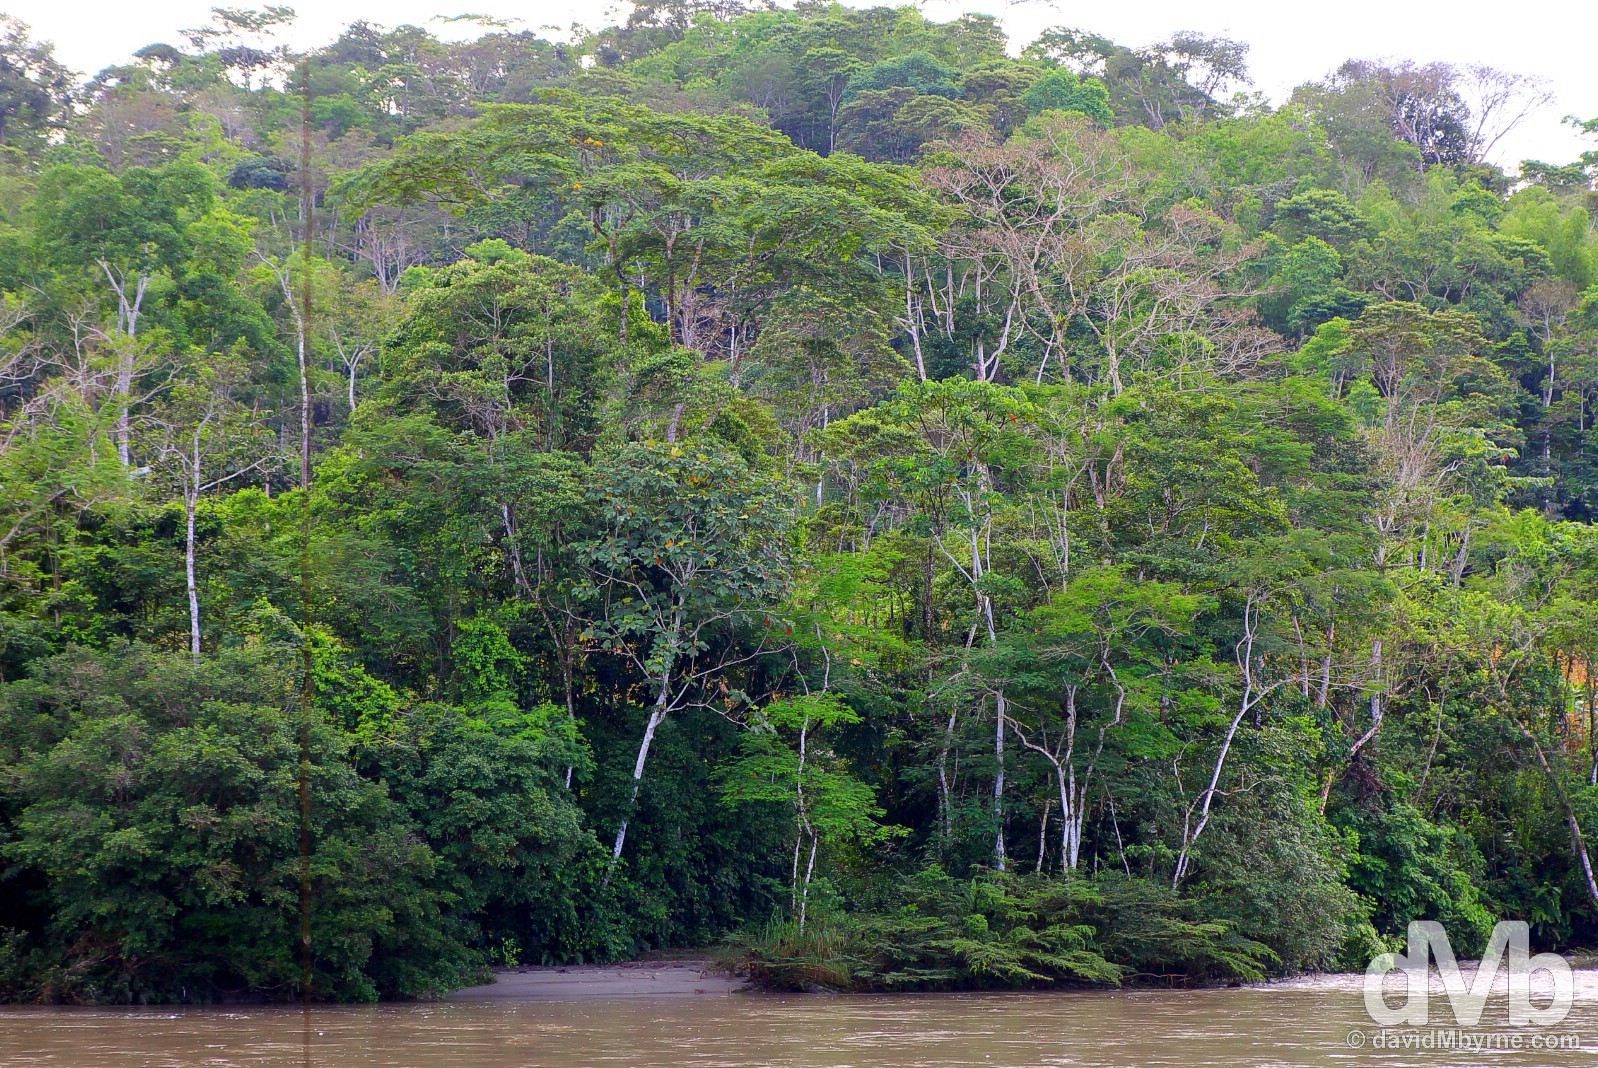 The Ecuadorian rain forest. July 13, 2015.